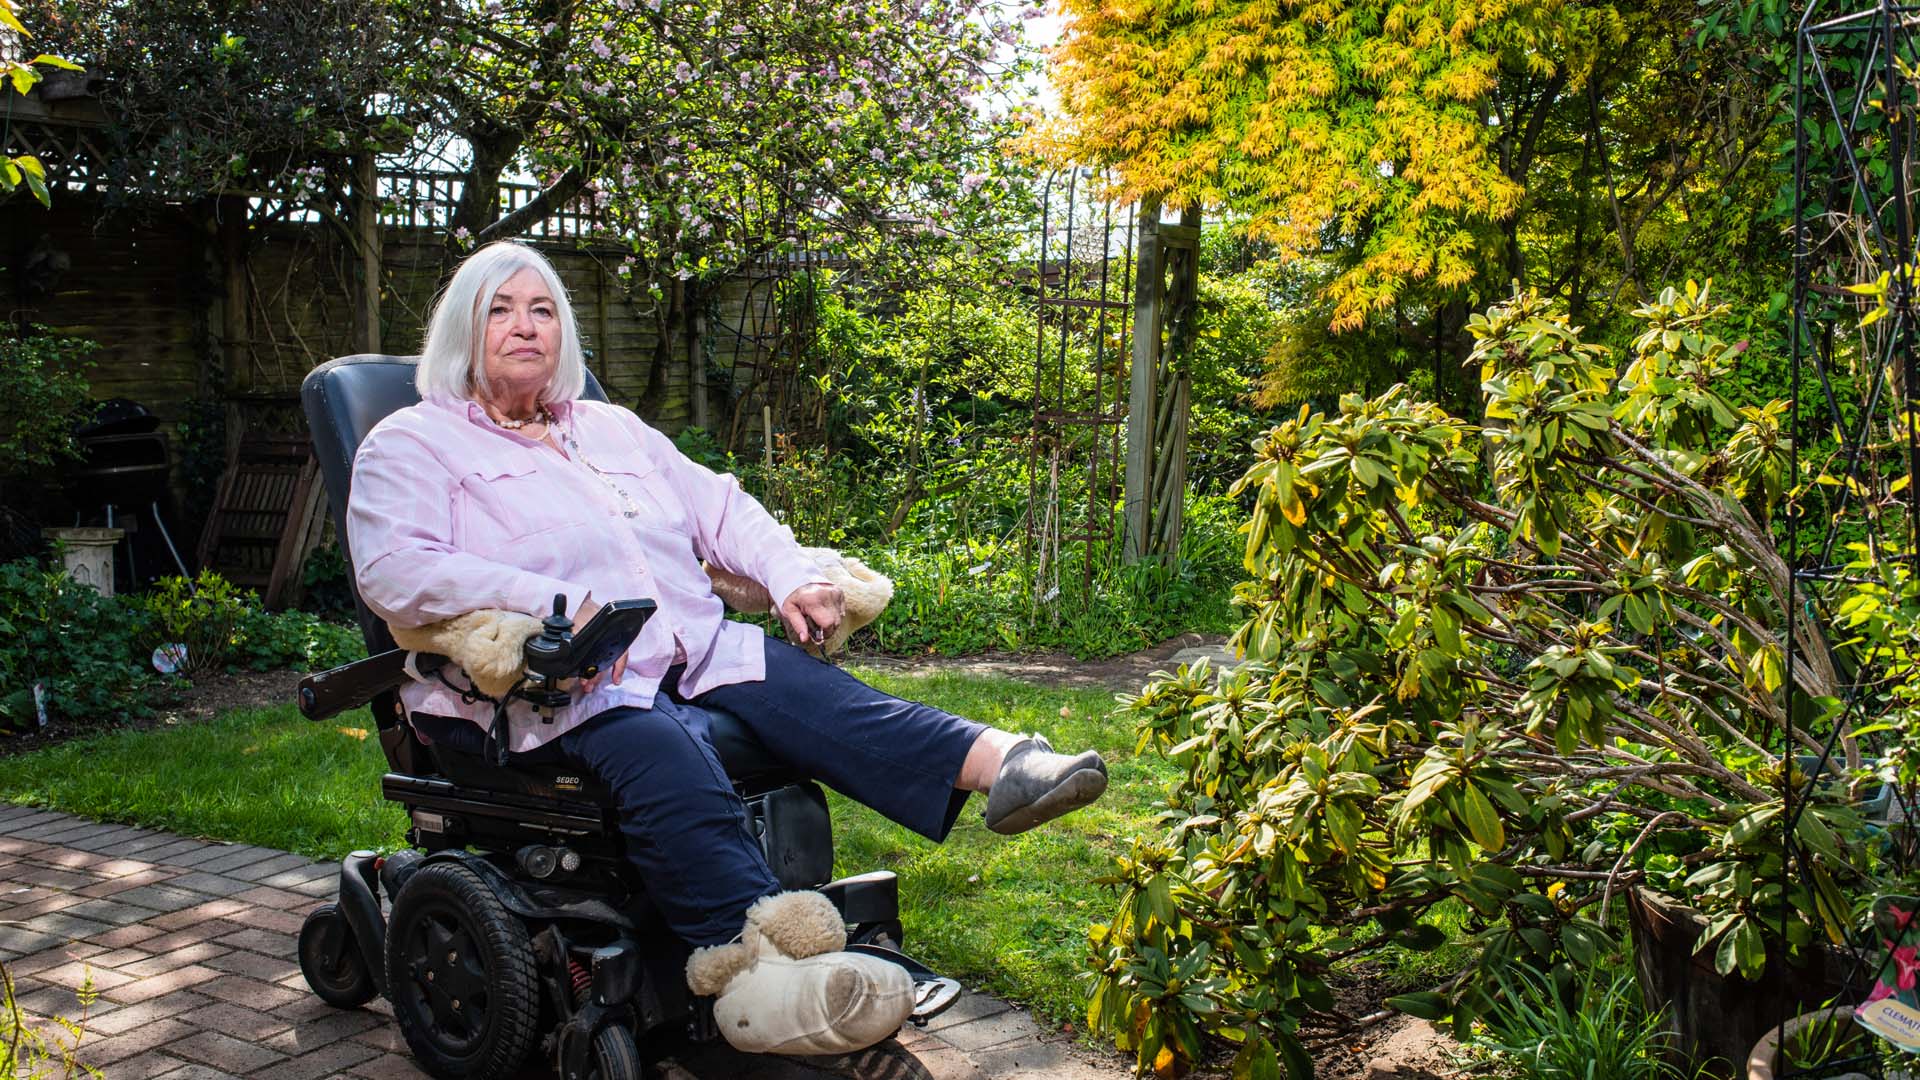 Sheila sitting in a garden